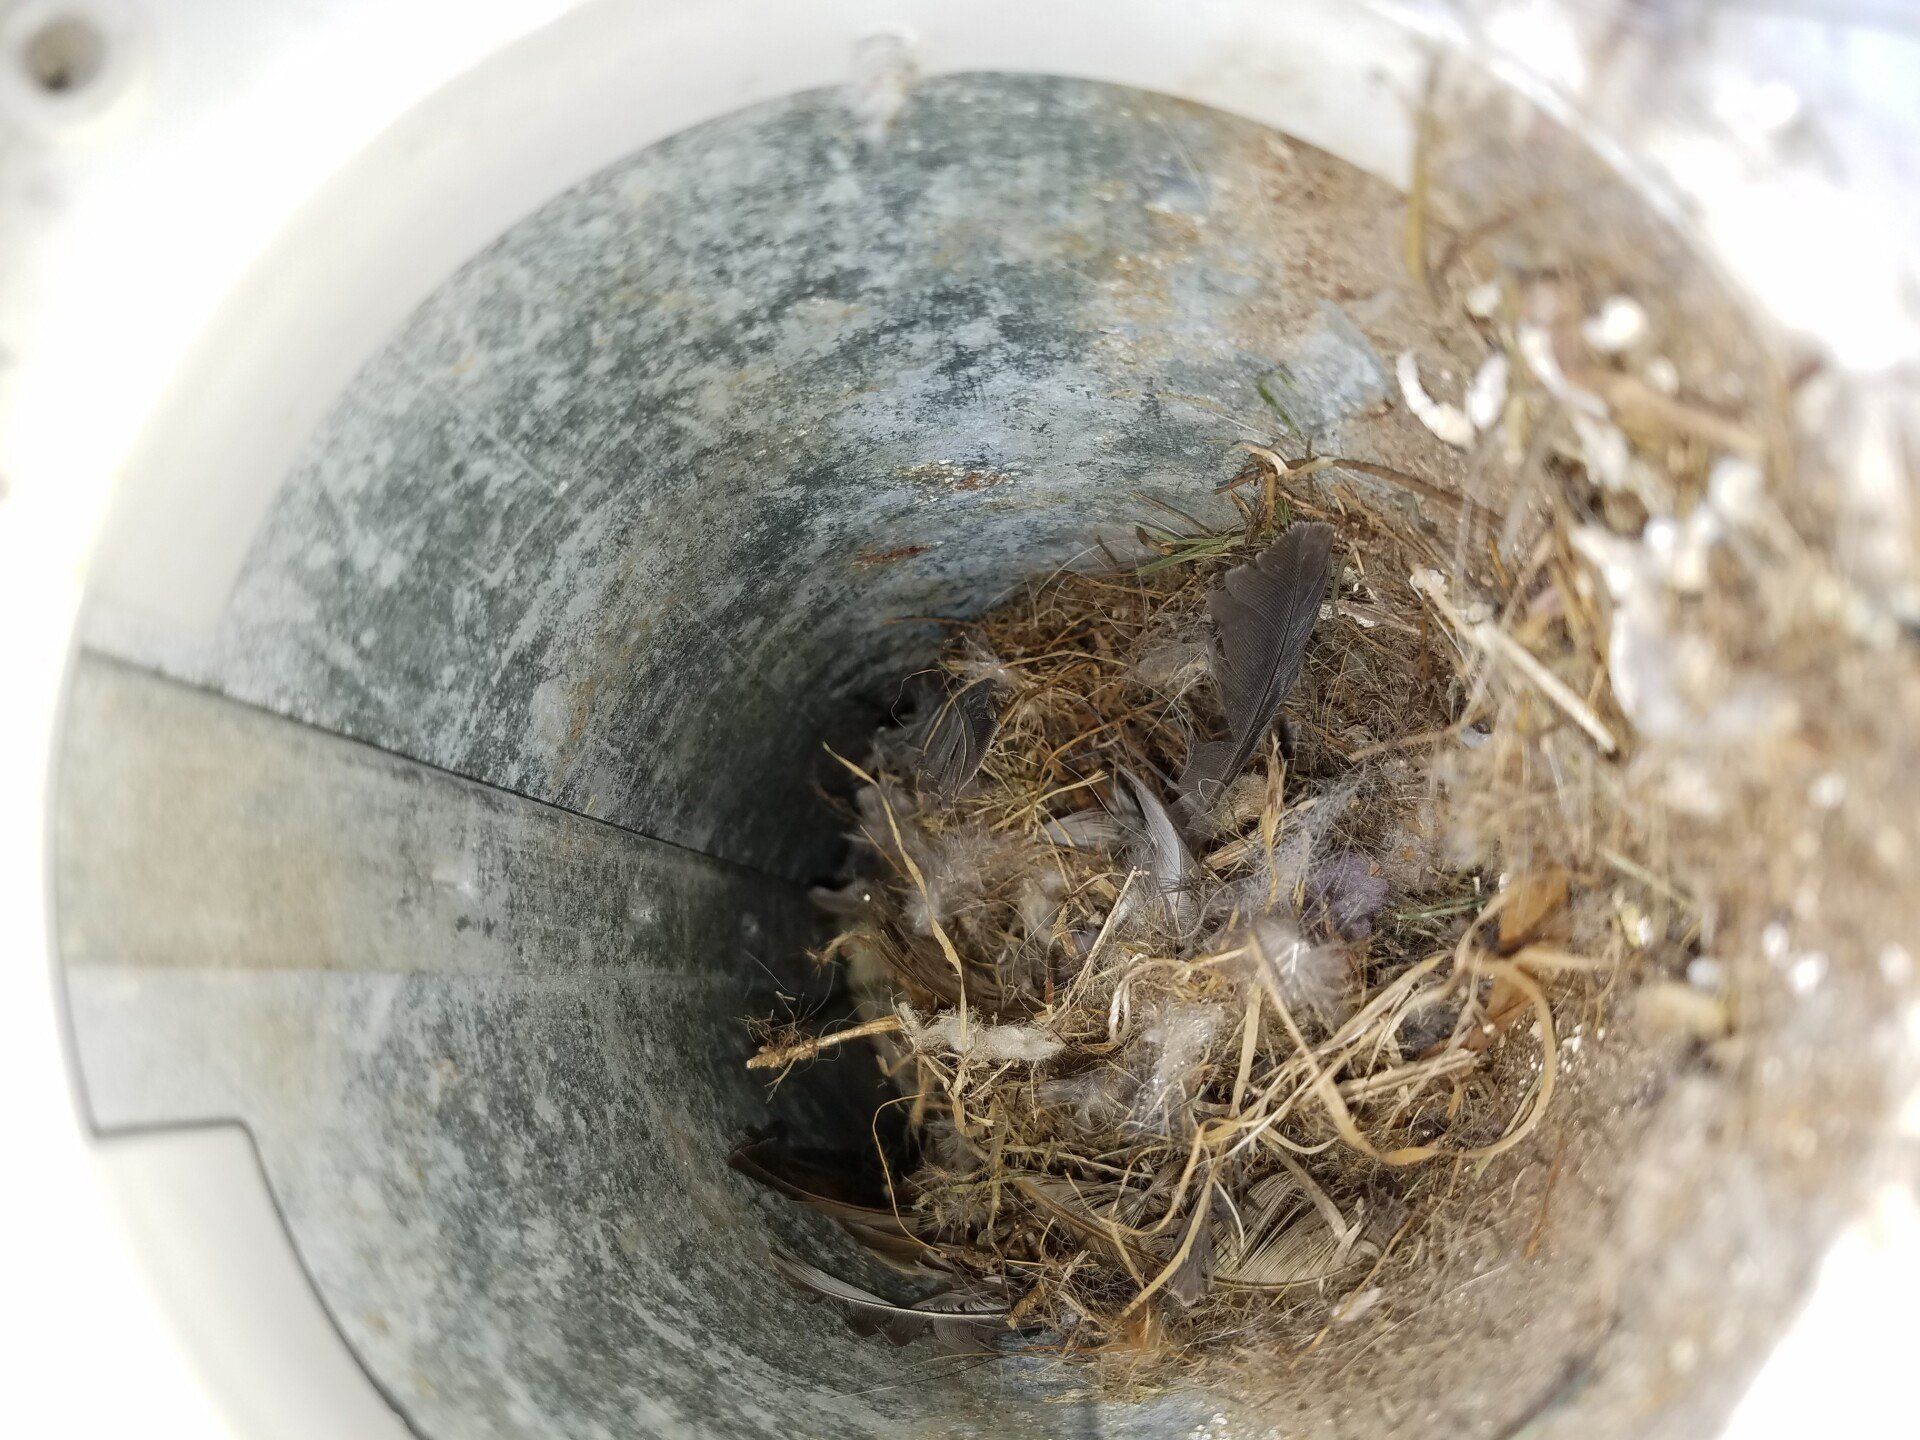 old malfunction vent cap allowing bird nest